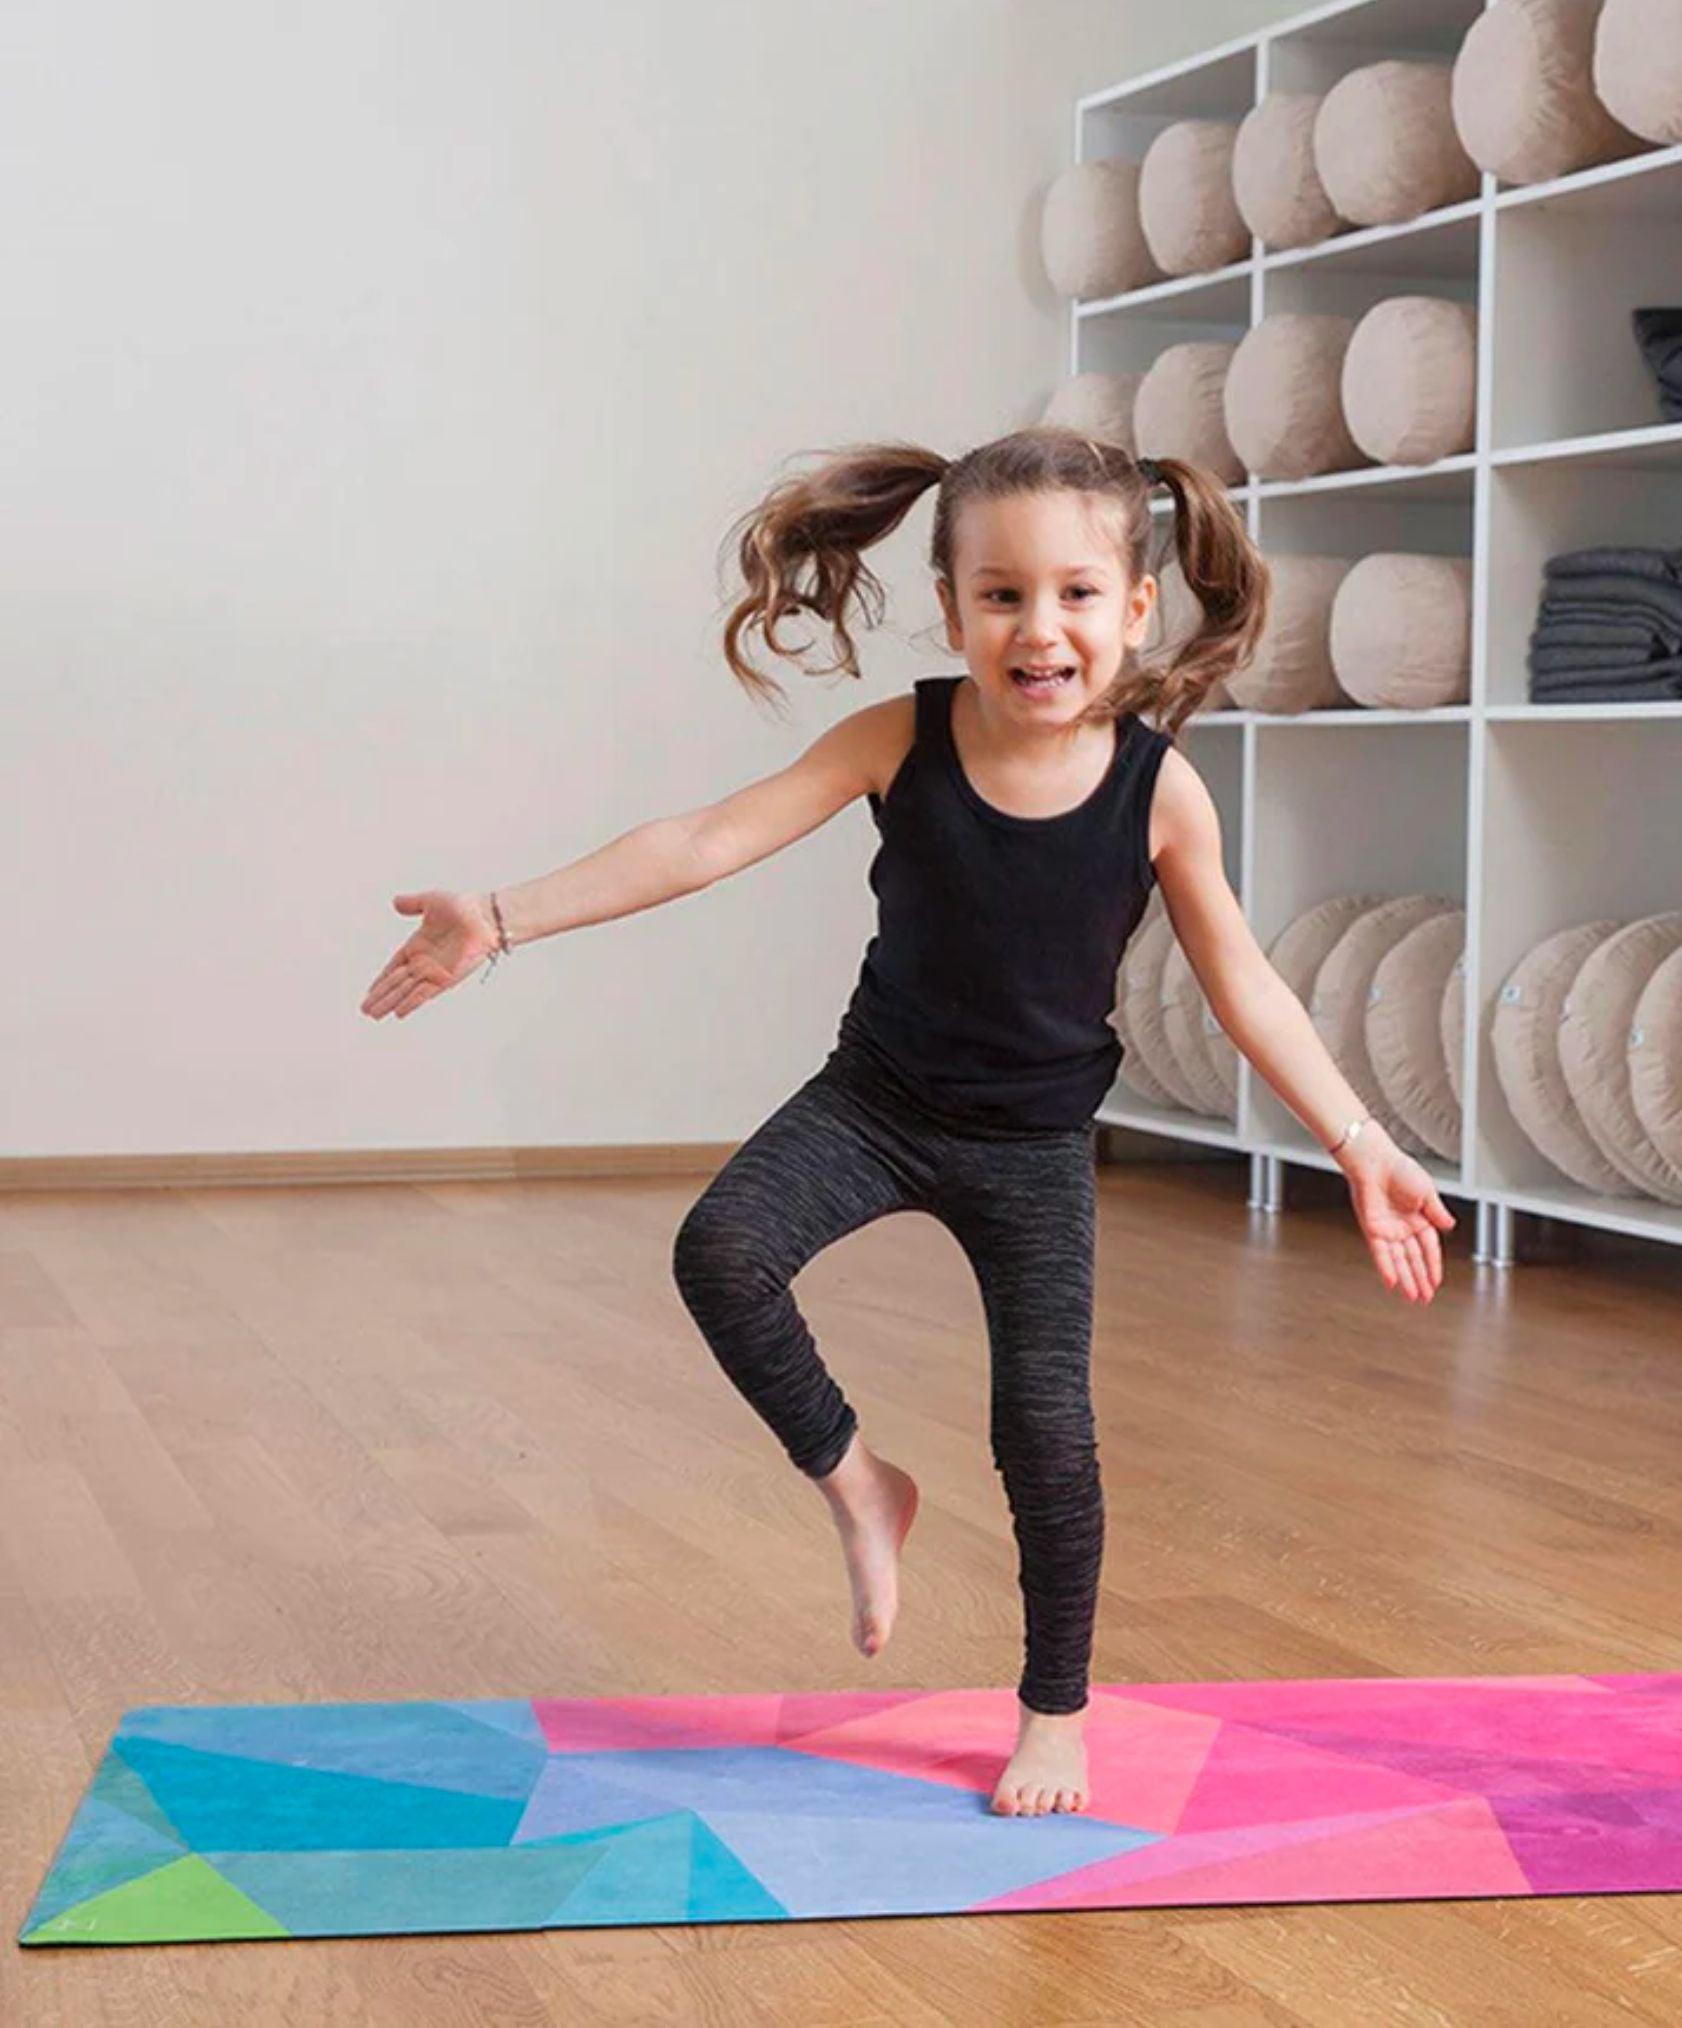 Garybank Panda Kids Yoga Mat Set - Non-slip Exercise Mats for Kids